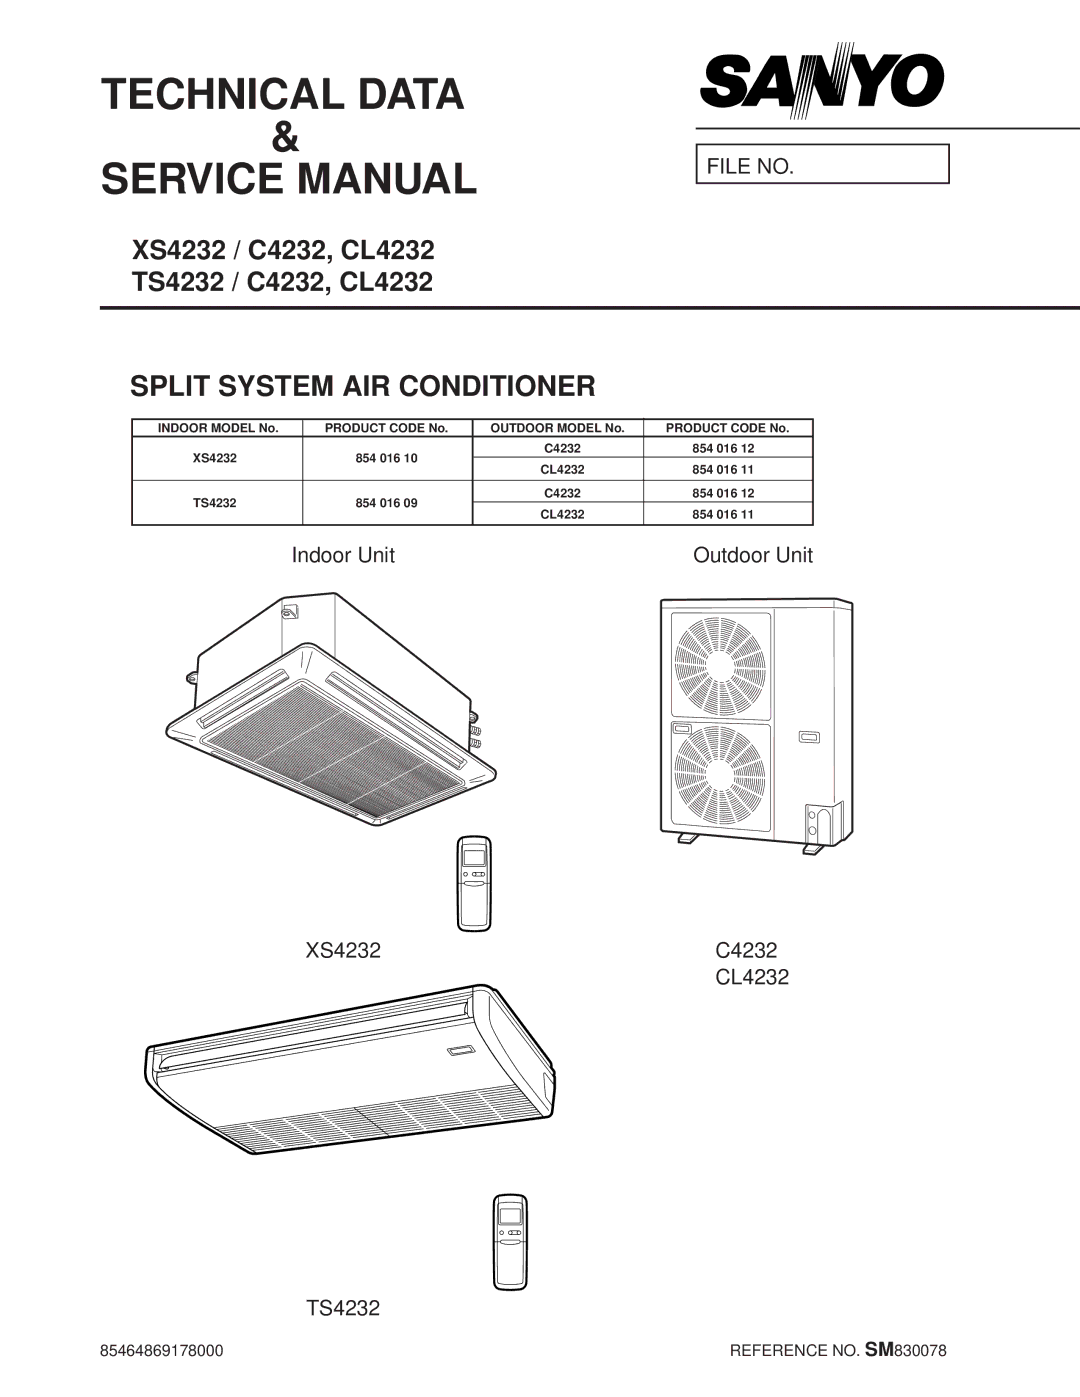 Sanyo CL4232 service manual Indoor Unit Outdoor Unit, XS4232 C4232, TS4232 